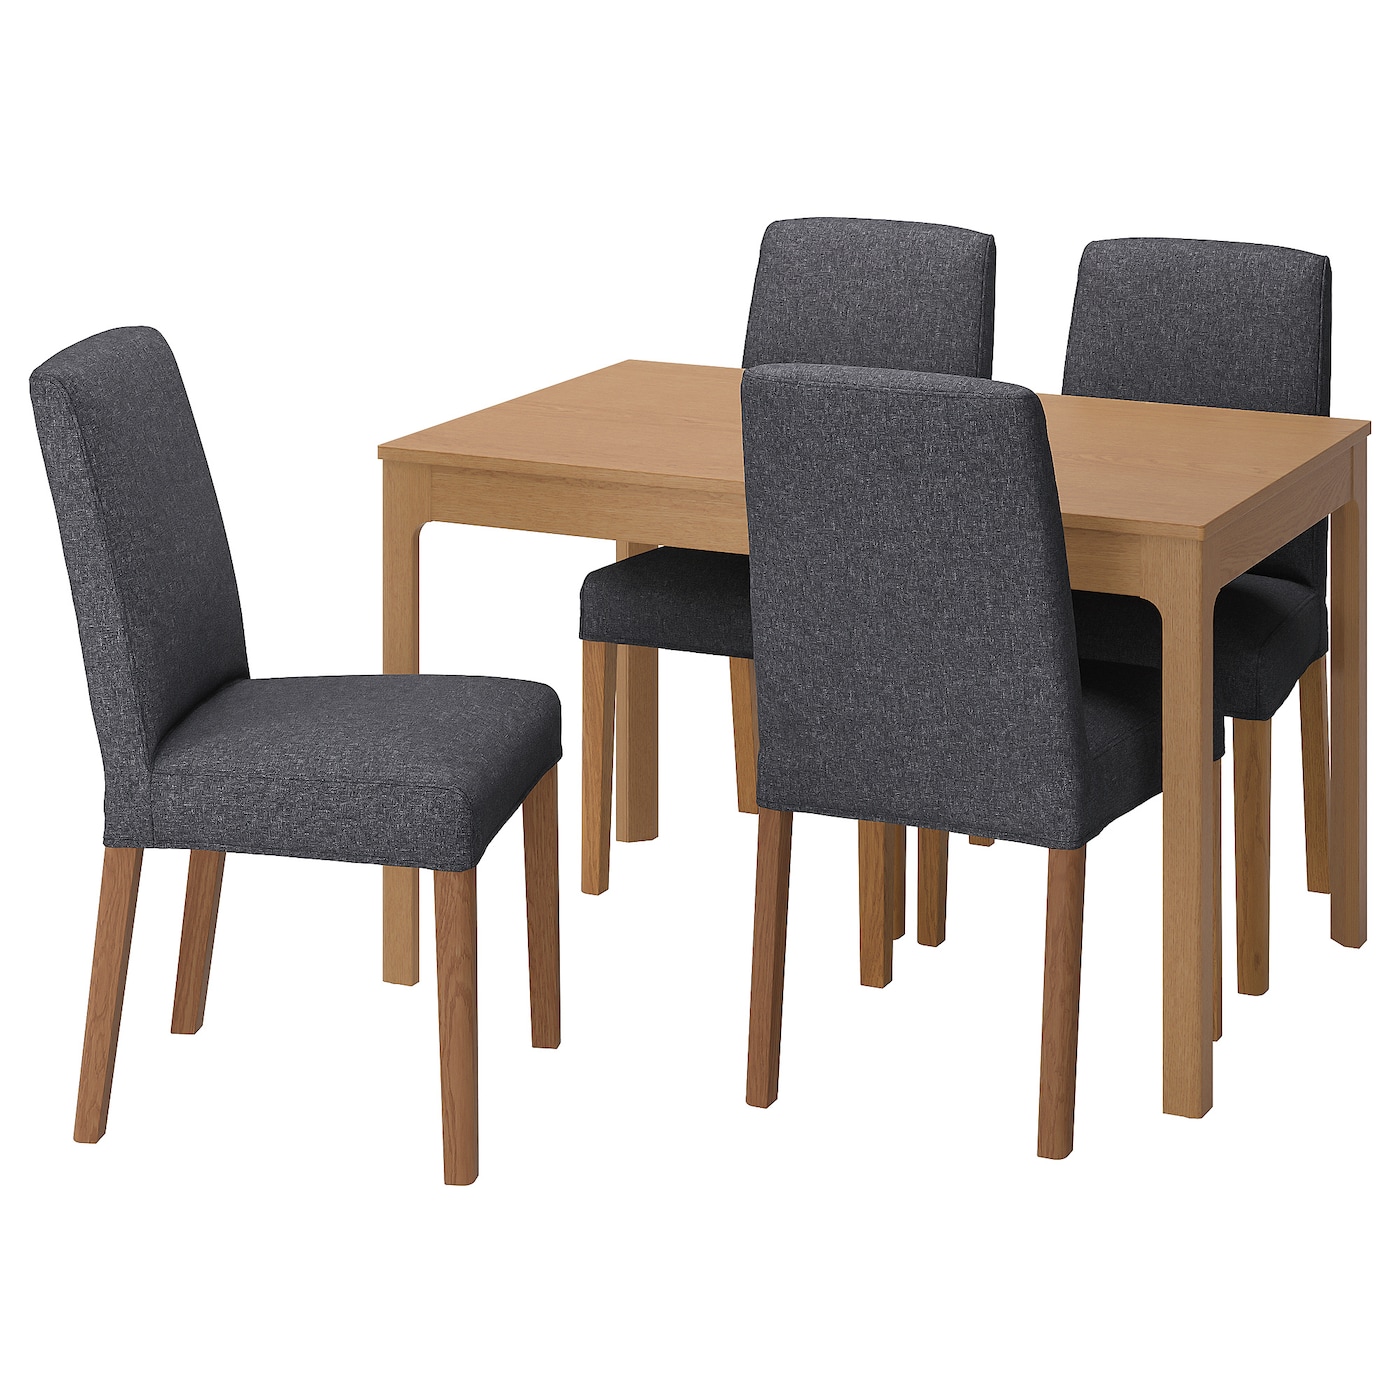 Стол и 4 стула - EKEDALEN / BERGMUND IKEA/ ЭКАДАЛЕН /БЕРГМУНД ИКЕА, 120/180 см, коричневый/серый